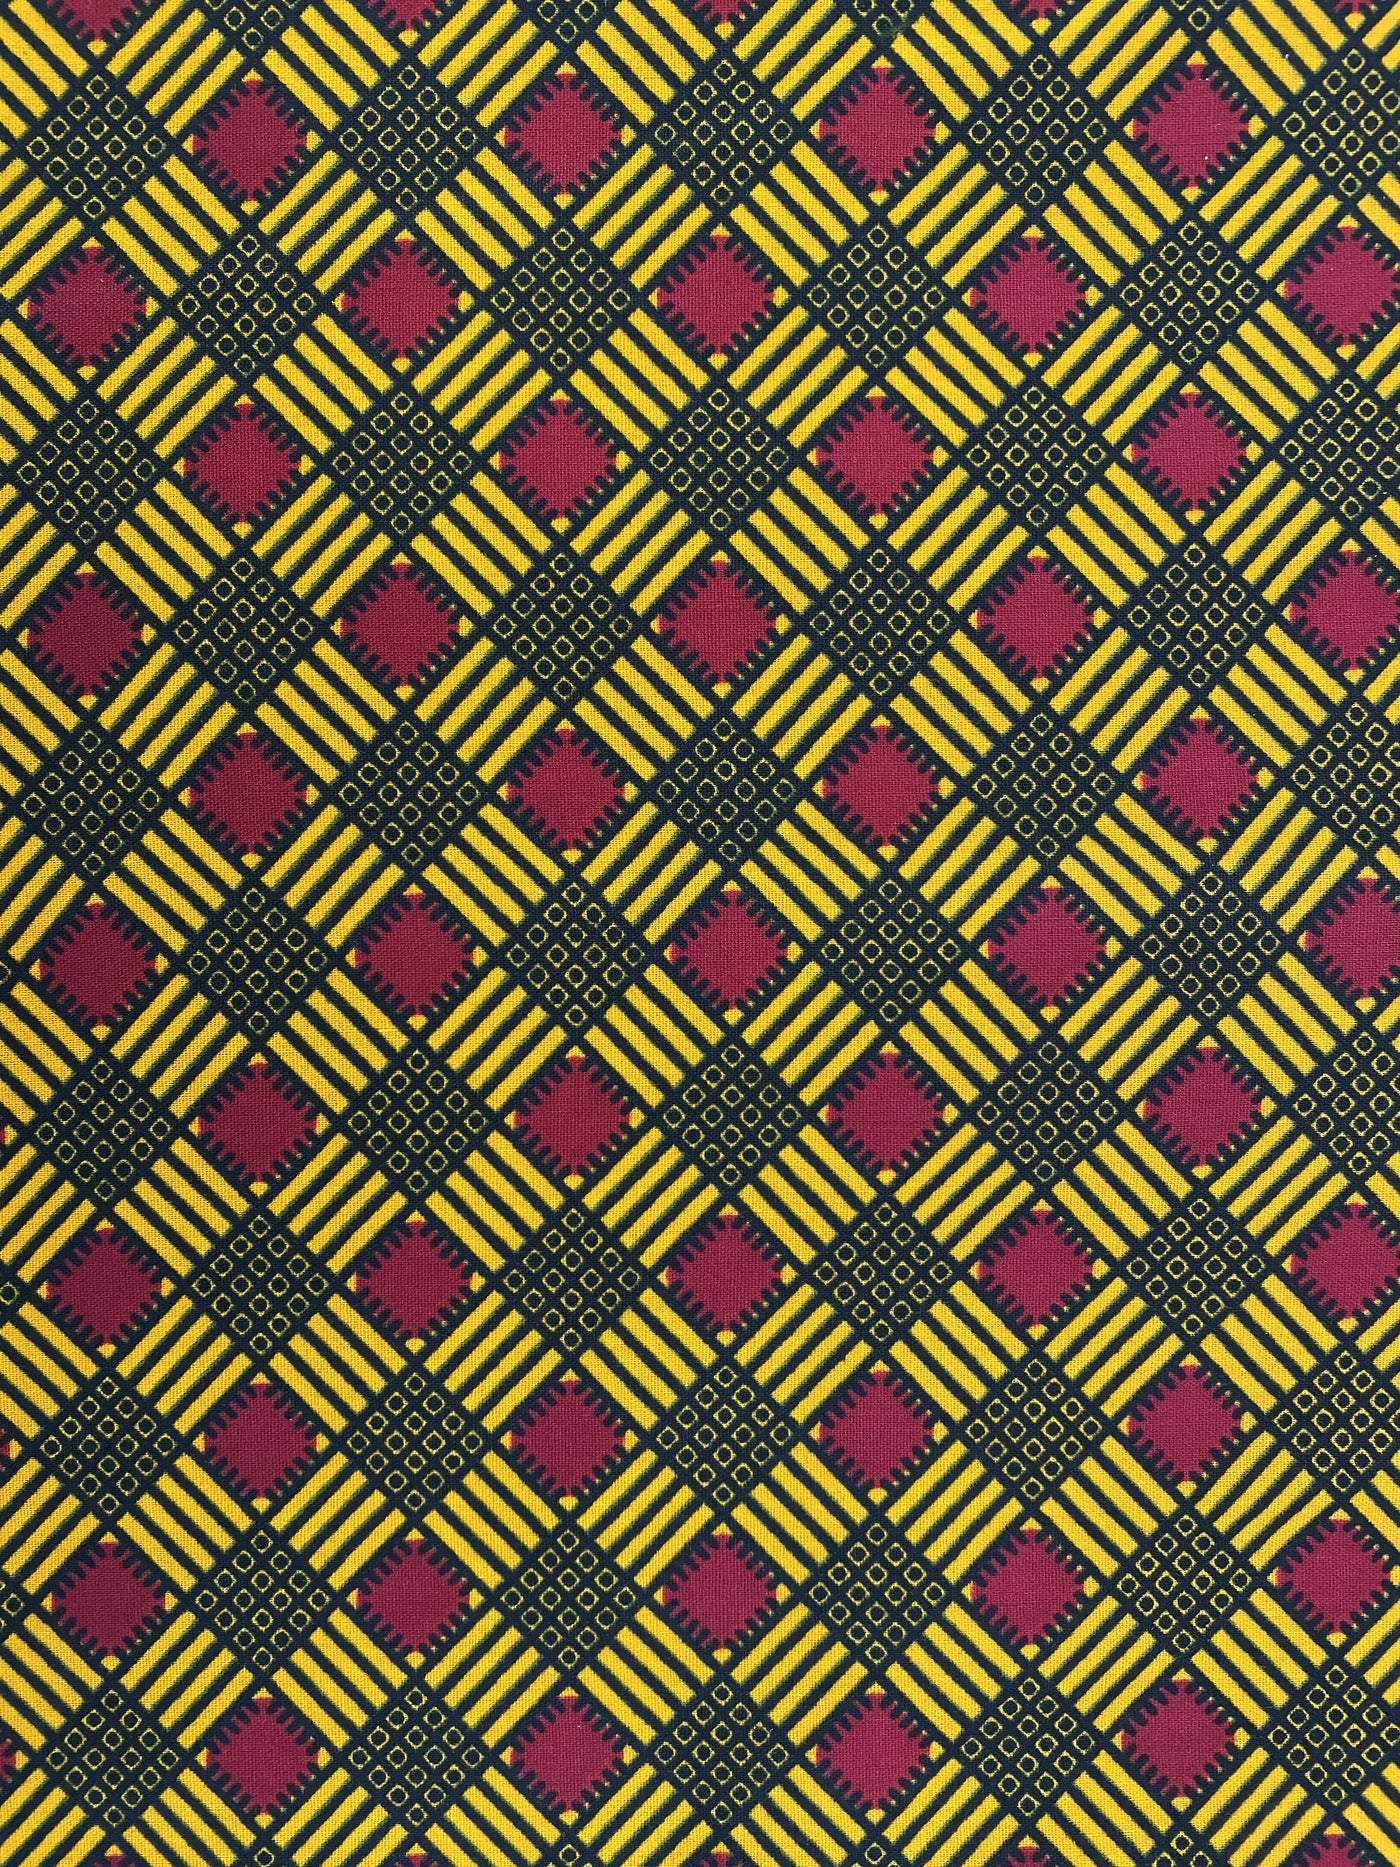 Ankara Fabric - 78516-6